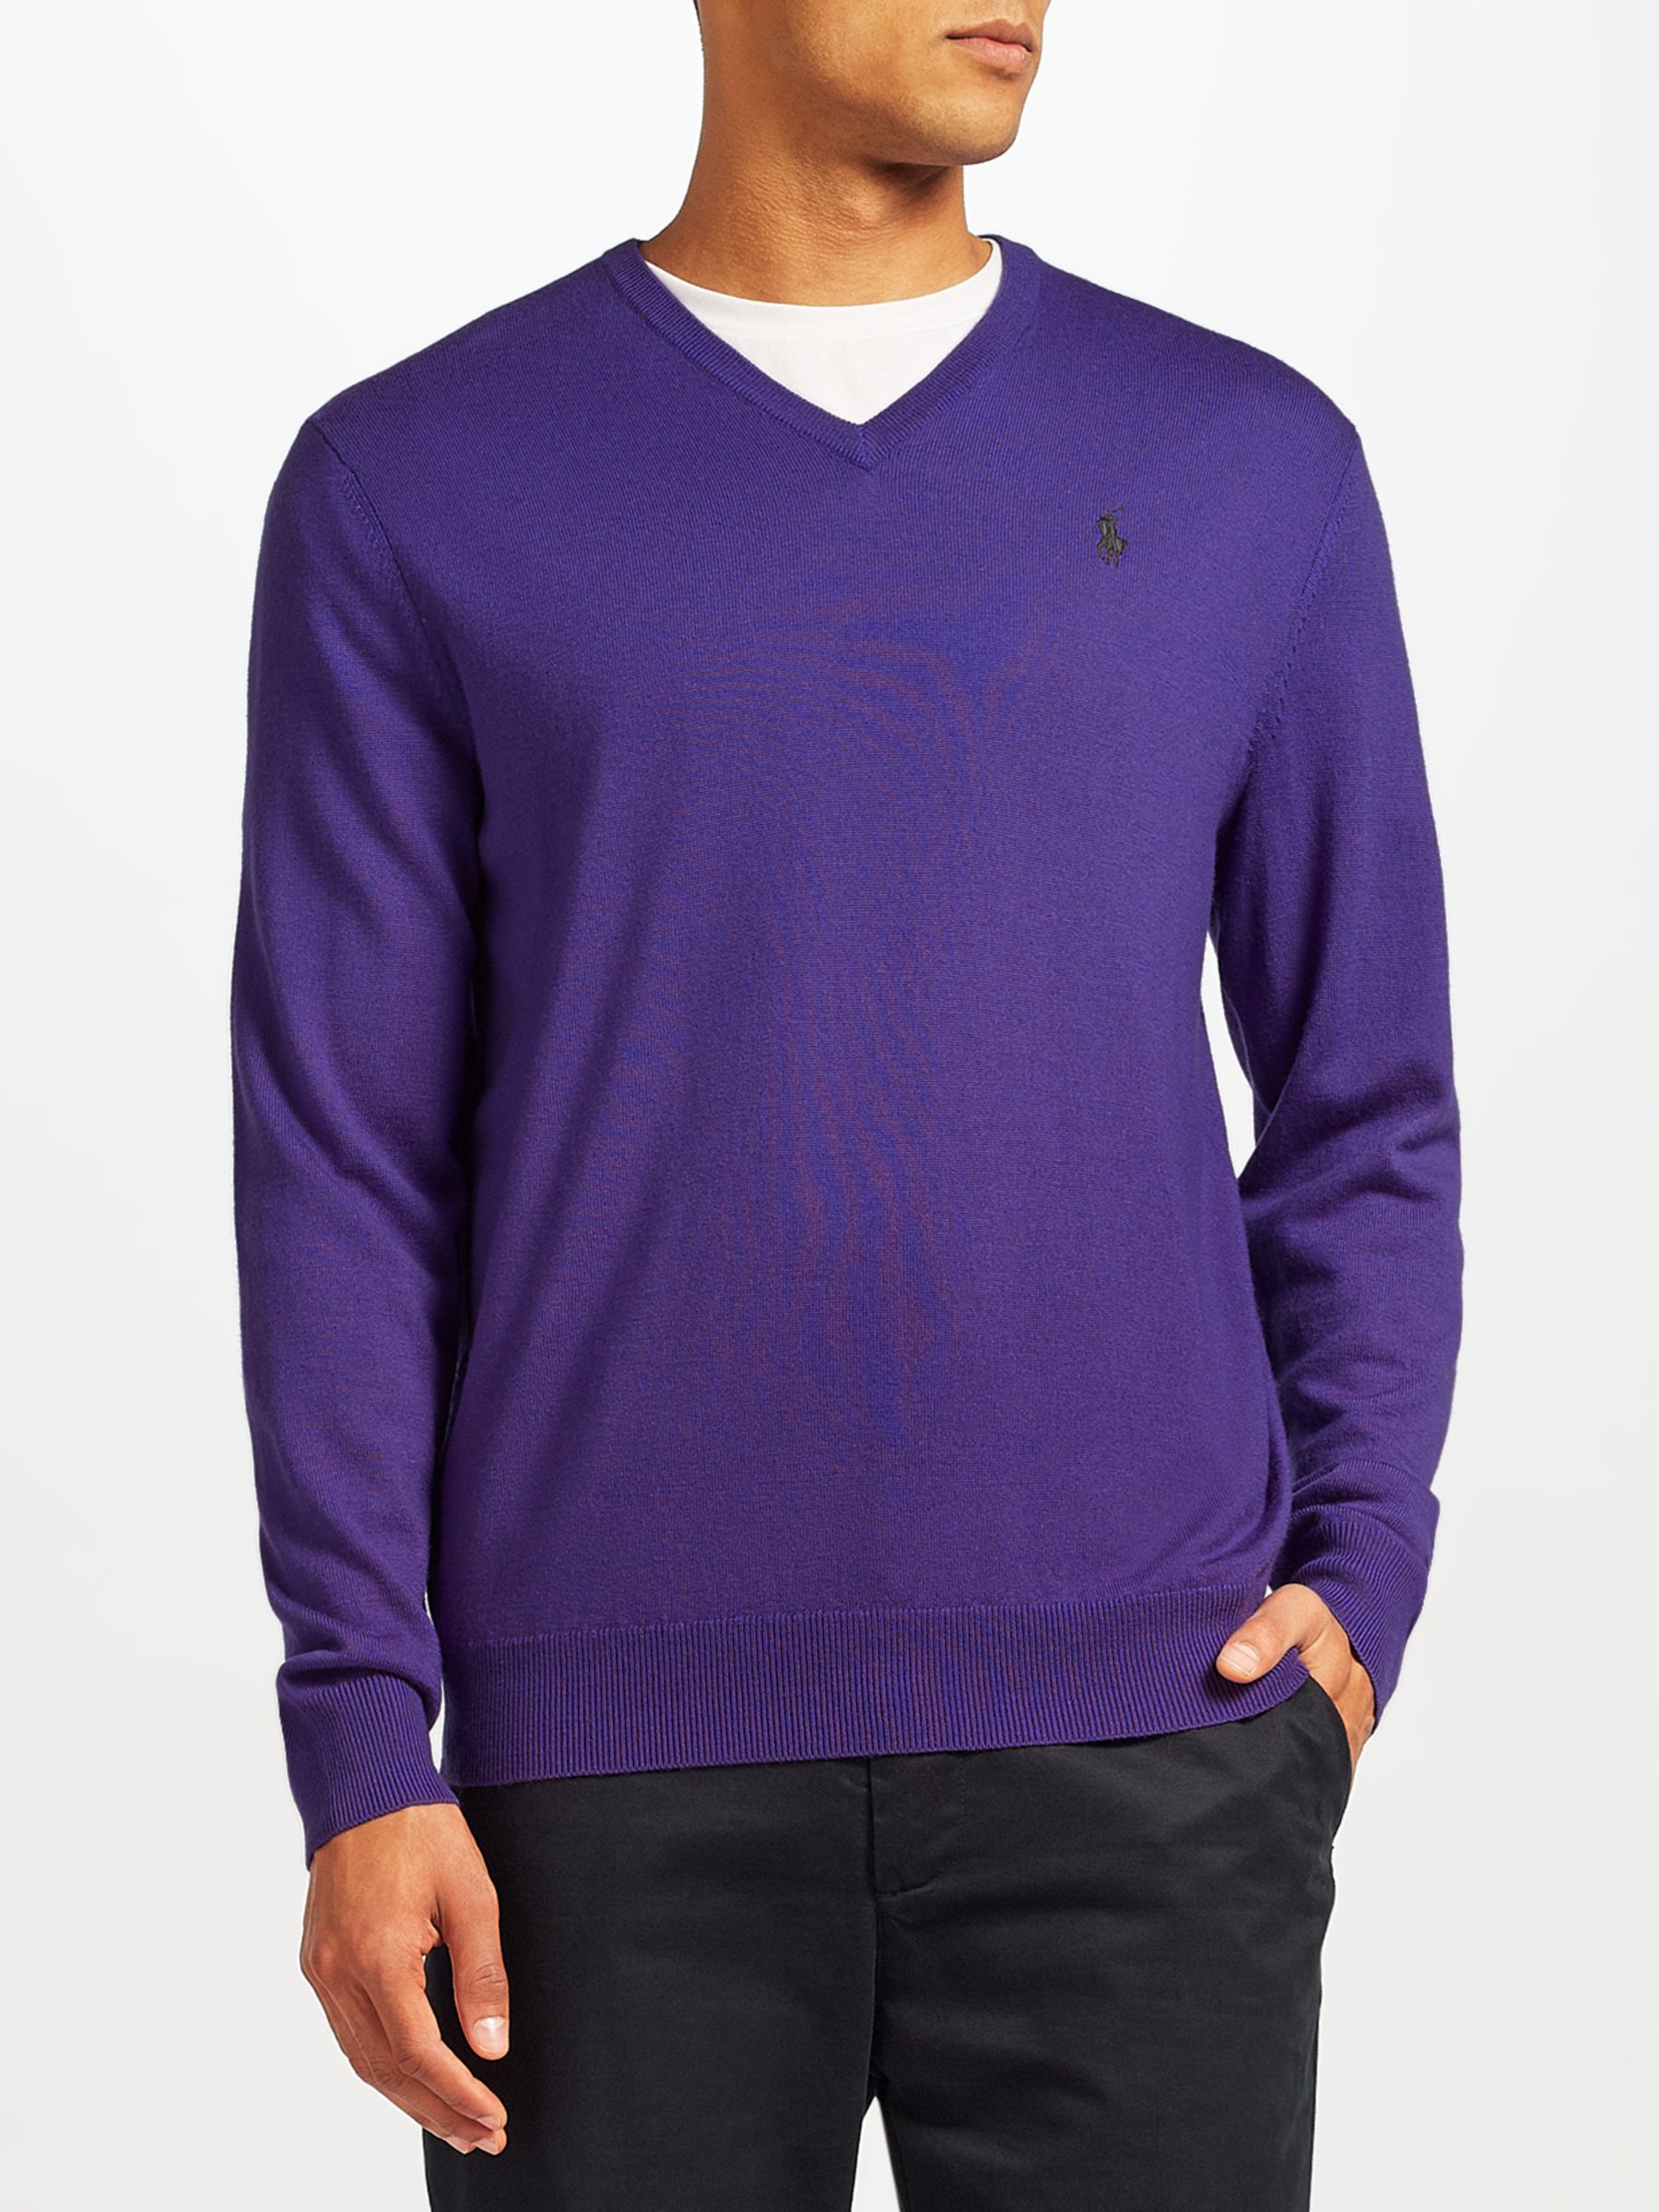 purple ralph lauren jumper